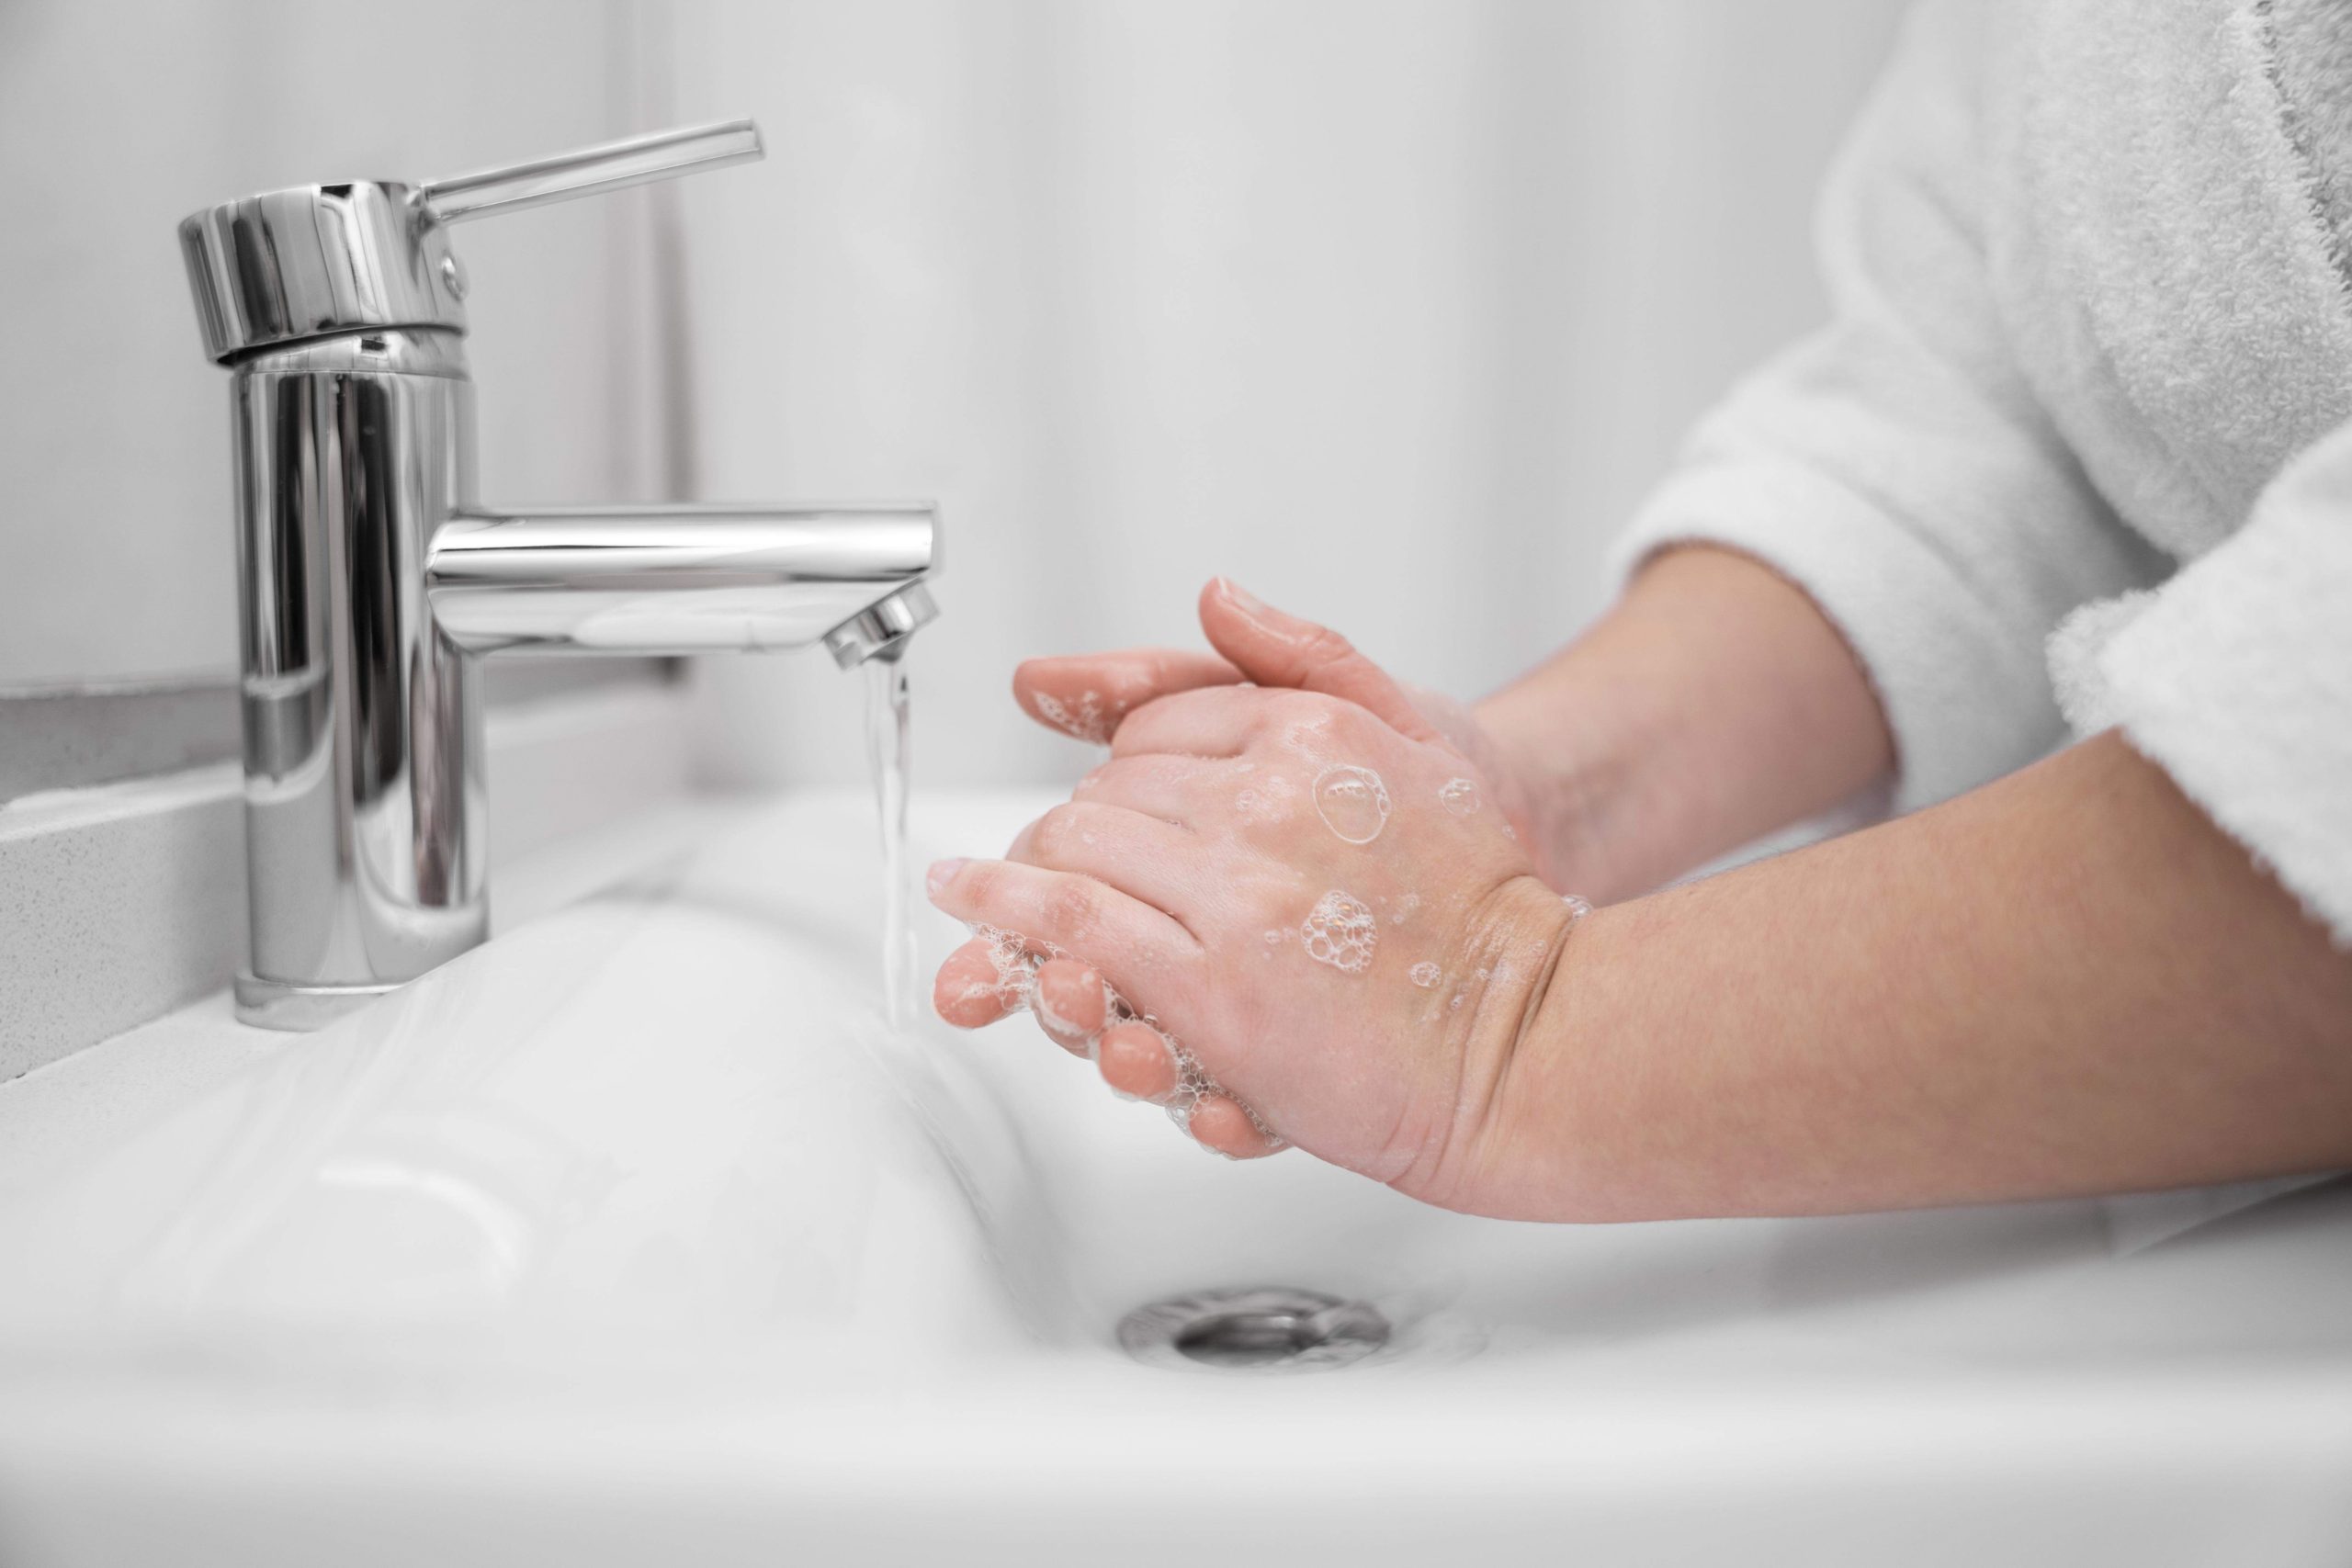 Practice good hand hygiene